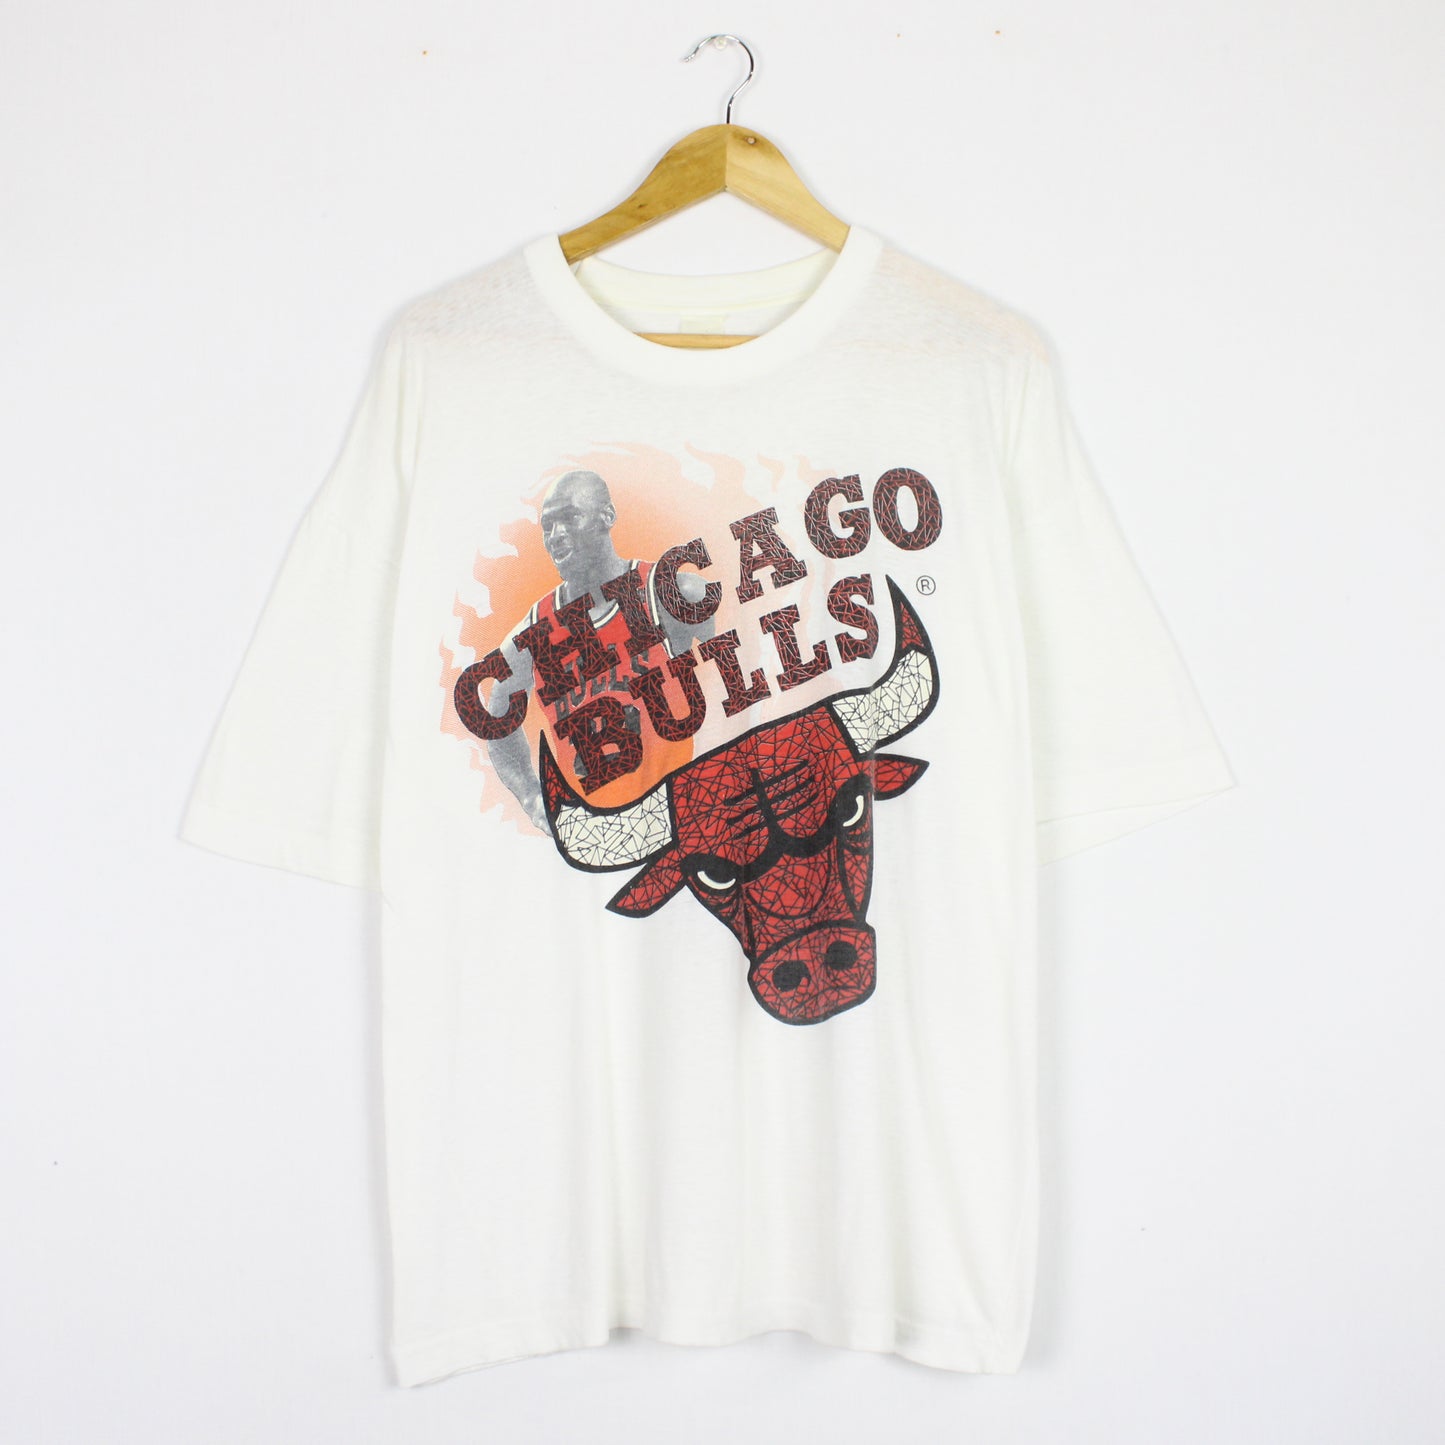 Vintage 90s Michael Jordan Chicago Bulls Tee - XL